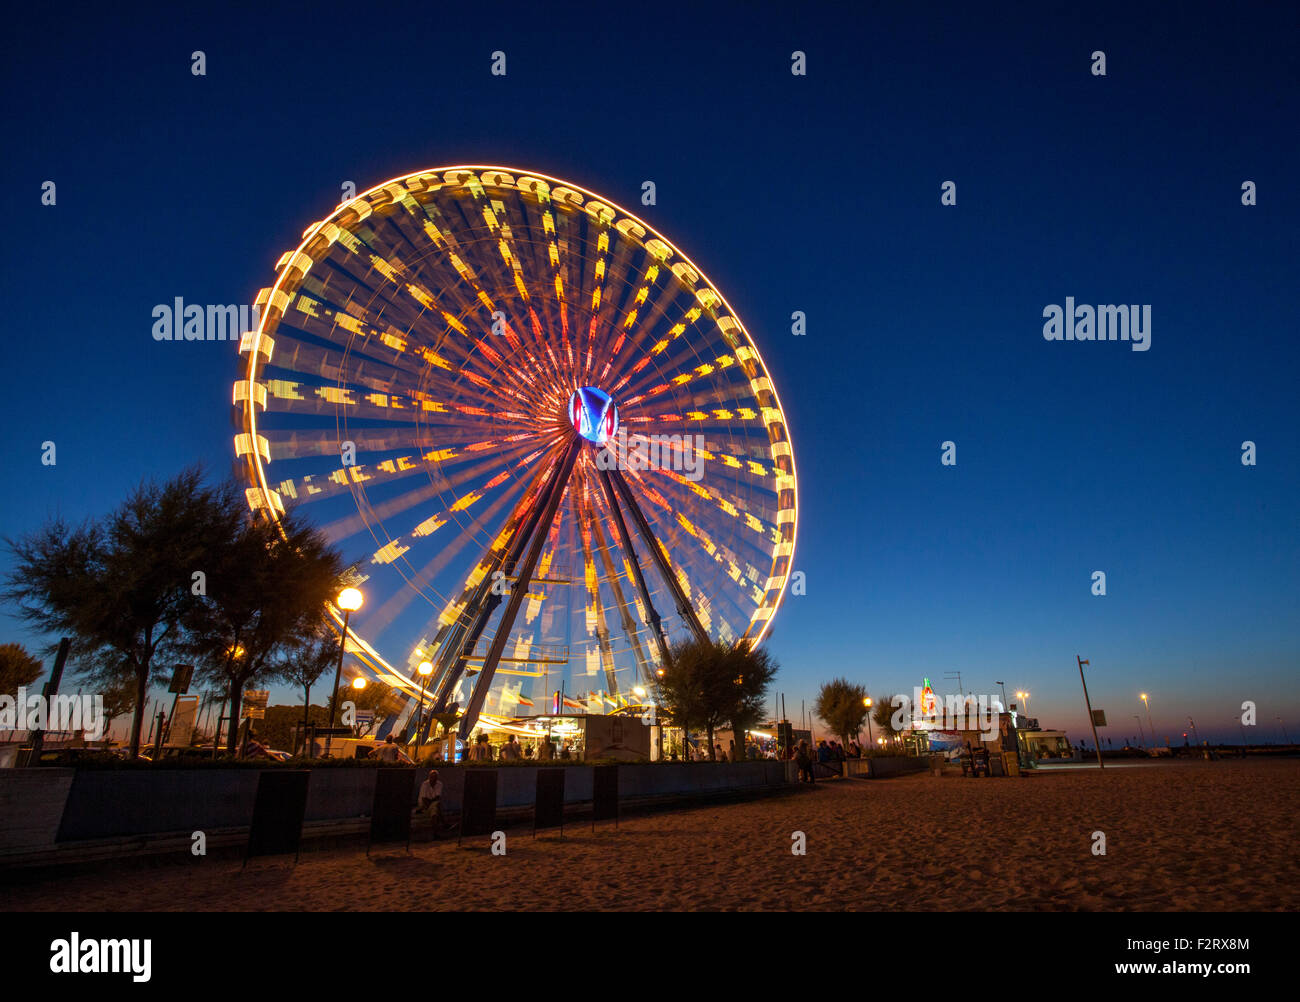 Illuminata ruota panoramica Ferris in movimento sfocato Foto Stock